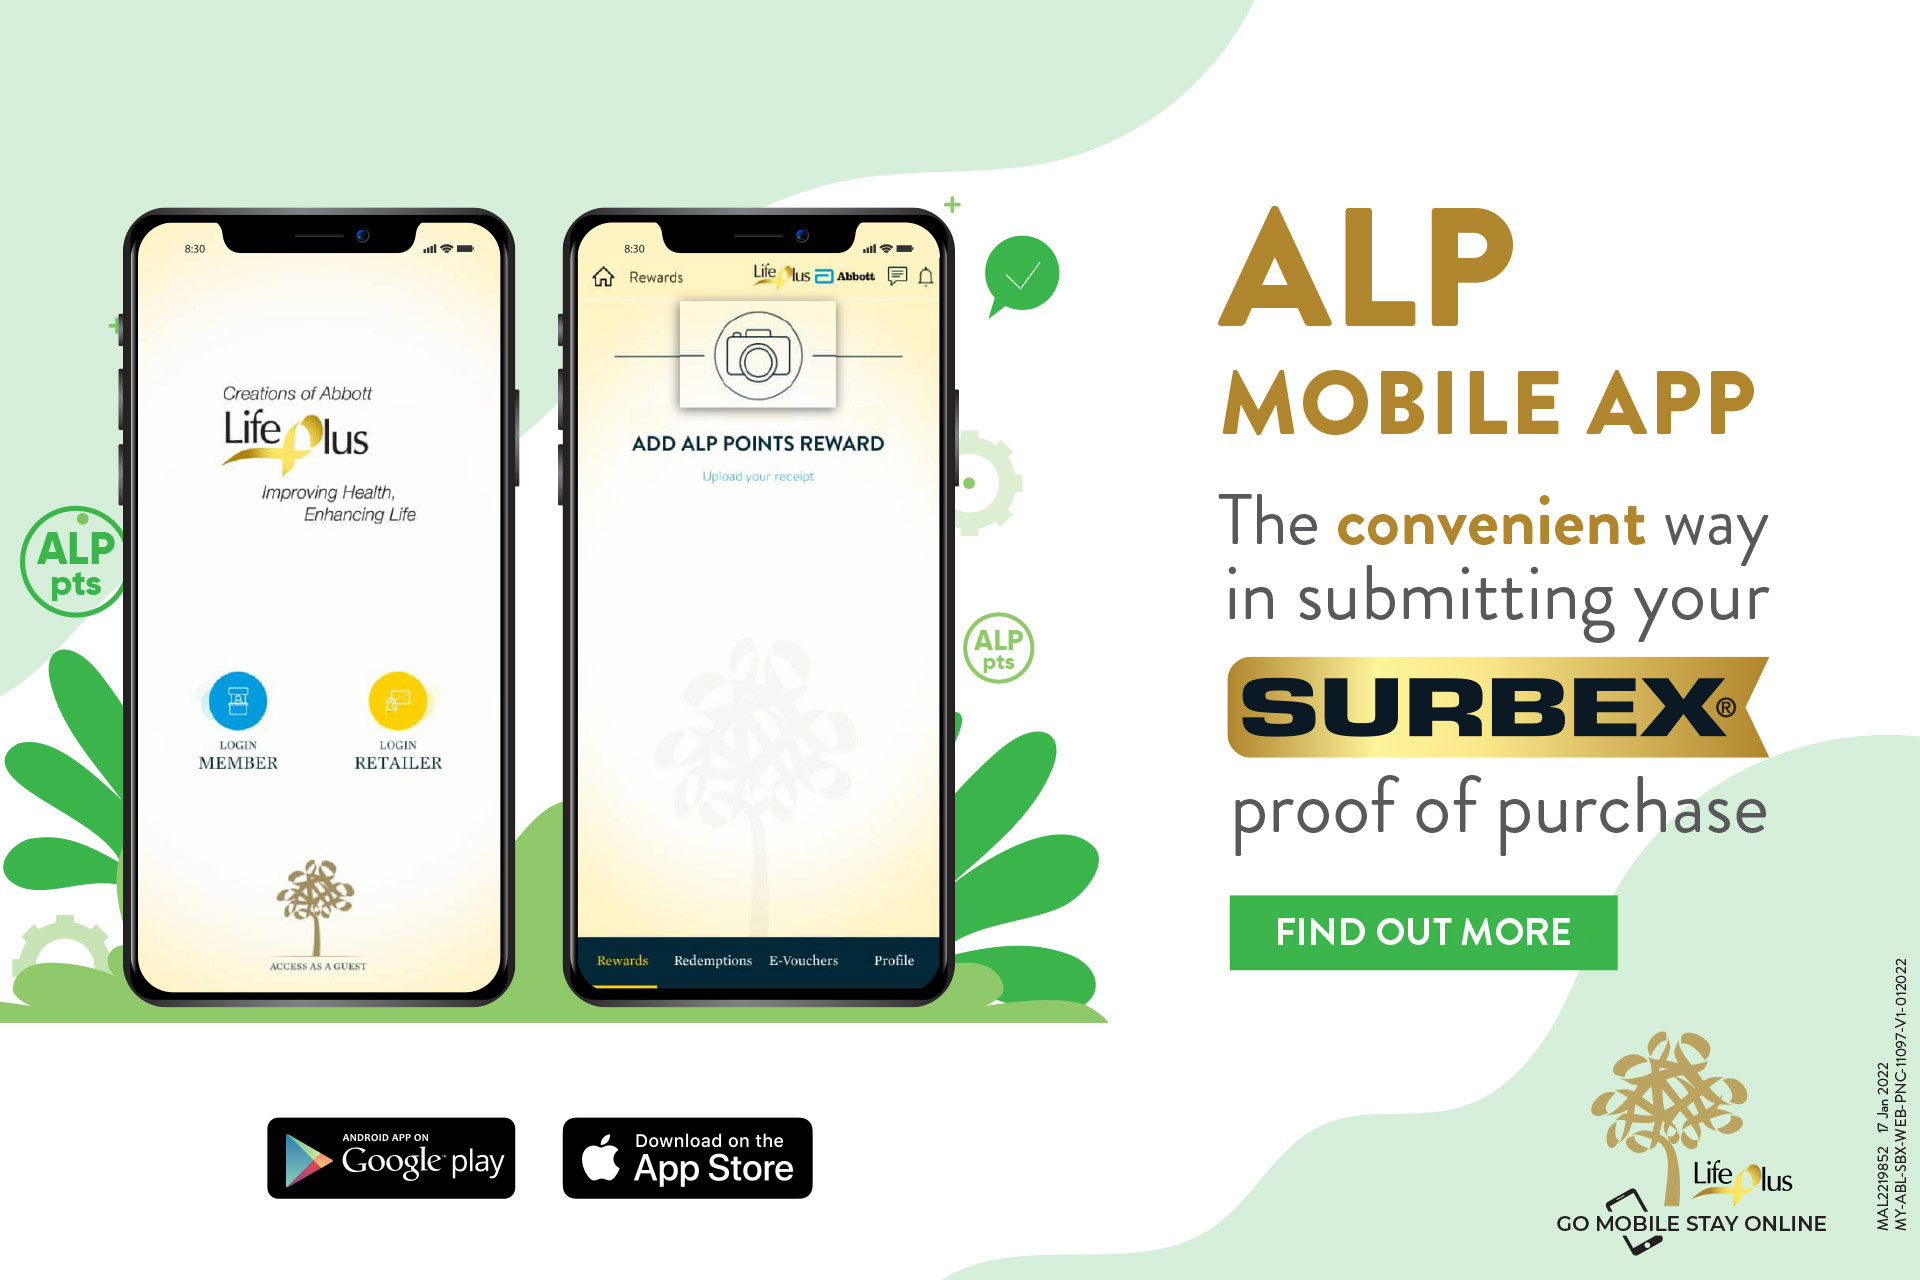 ALP Mobile App – Upload Proof of Purchase